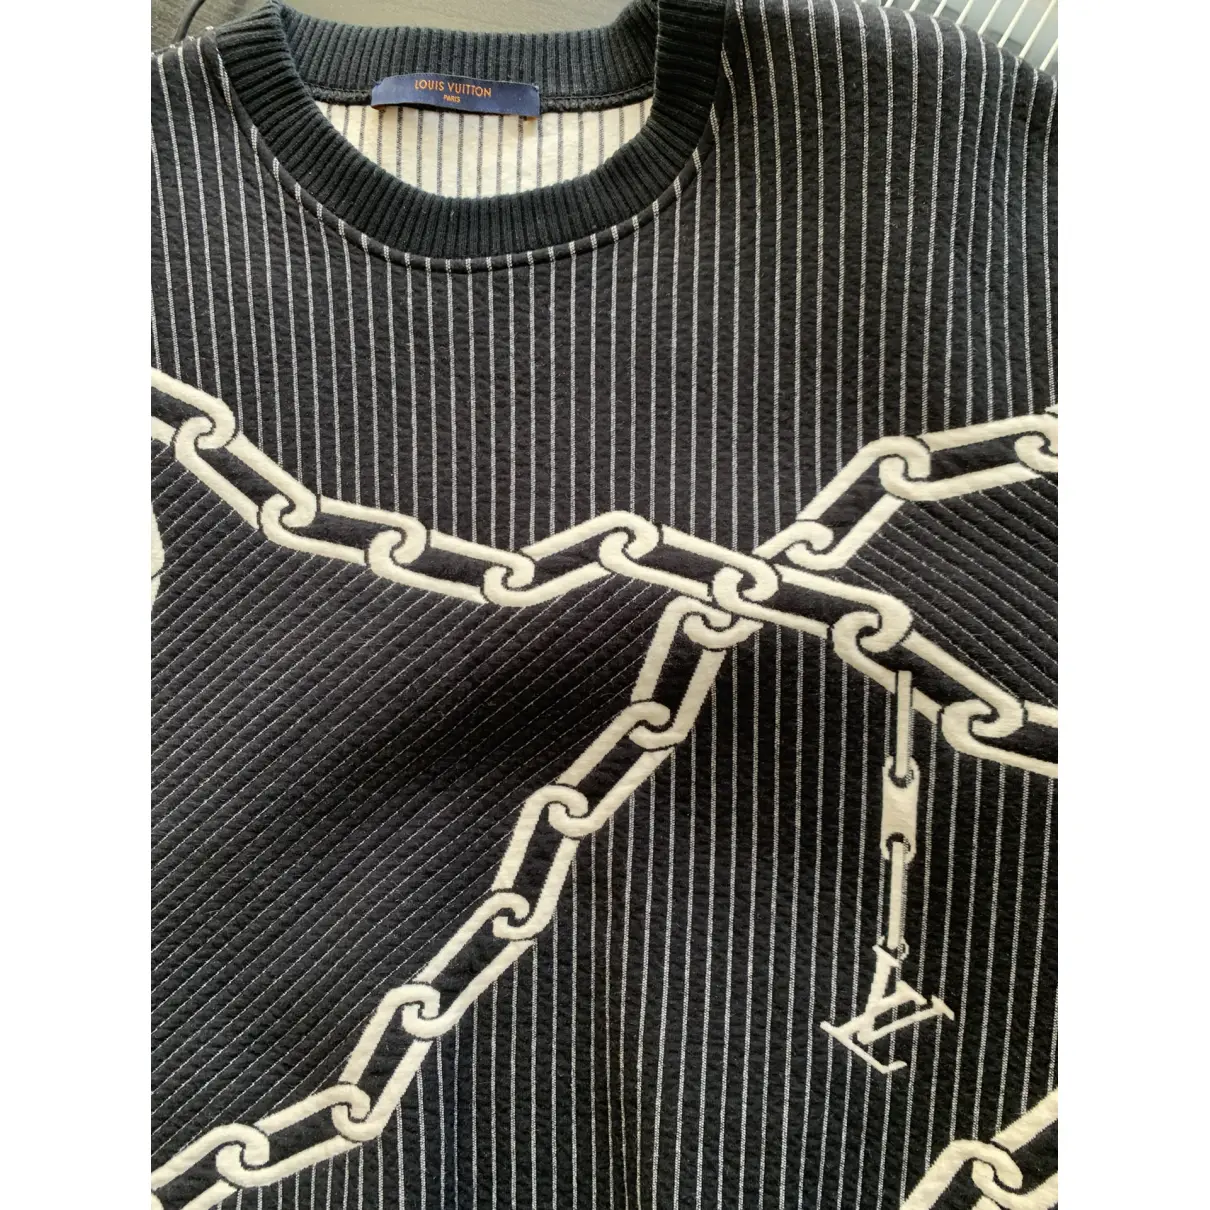 Sweatshirt Louis Vuitton